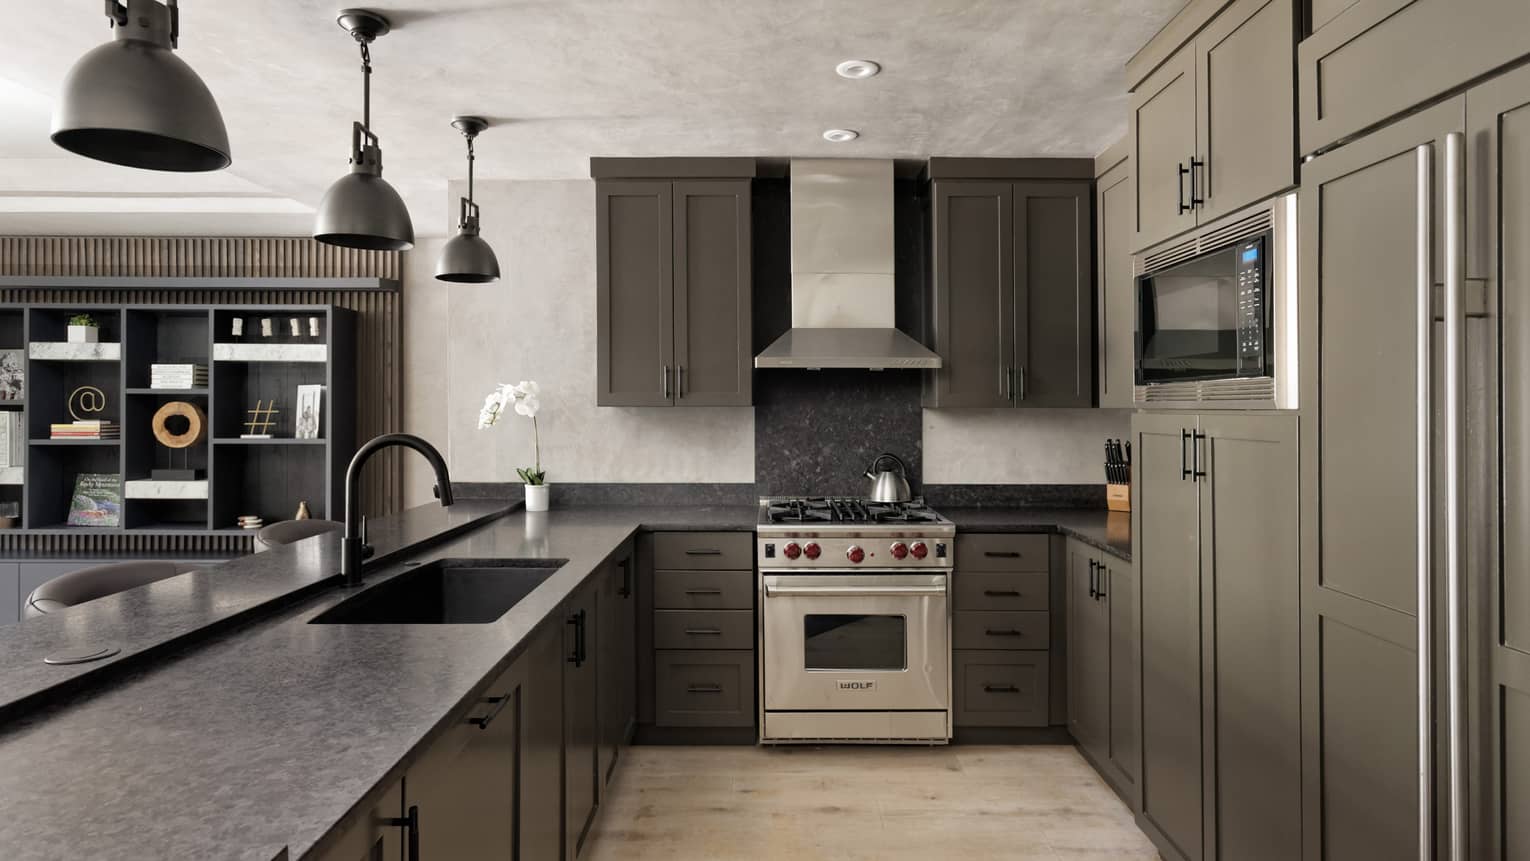 Kitchen with dark grey cabinets, three hanging metal lights, light wood floors